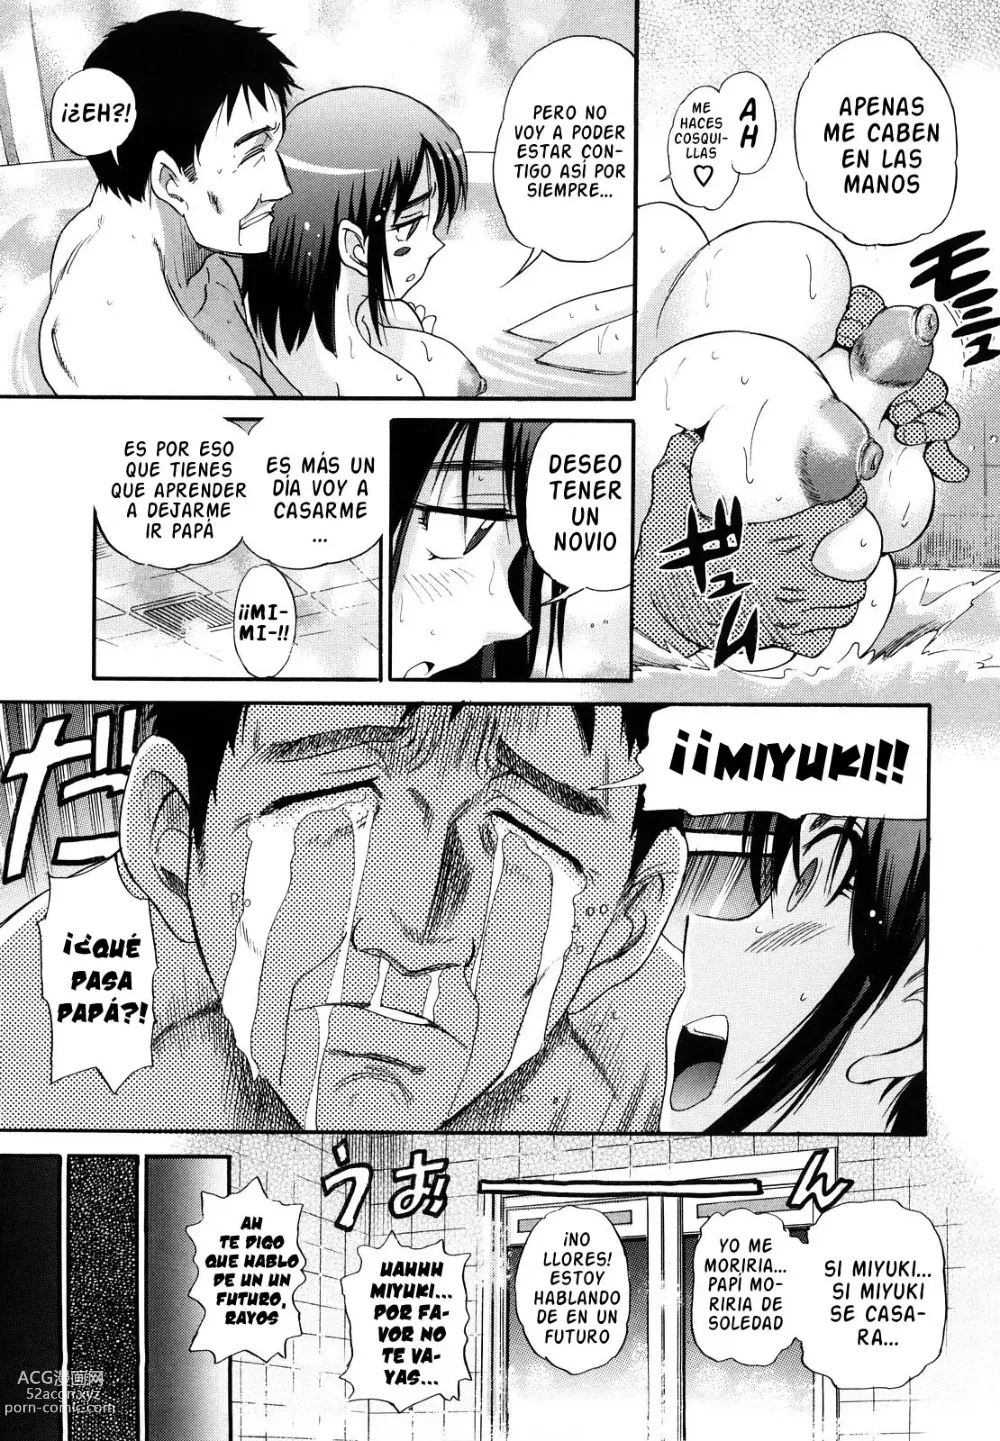 Page 194 of manga HHH Triple